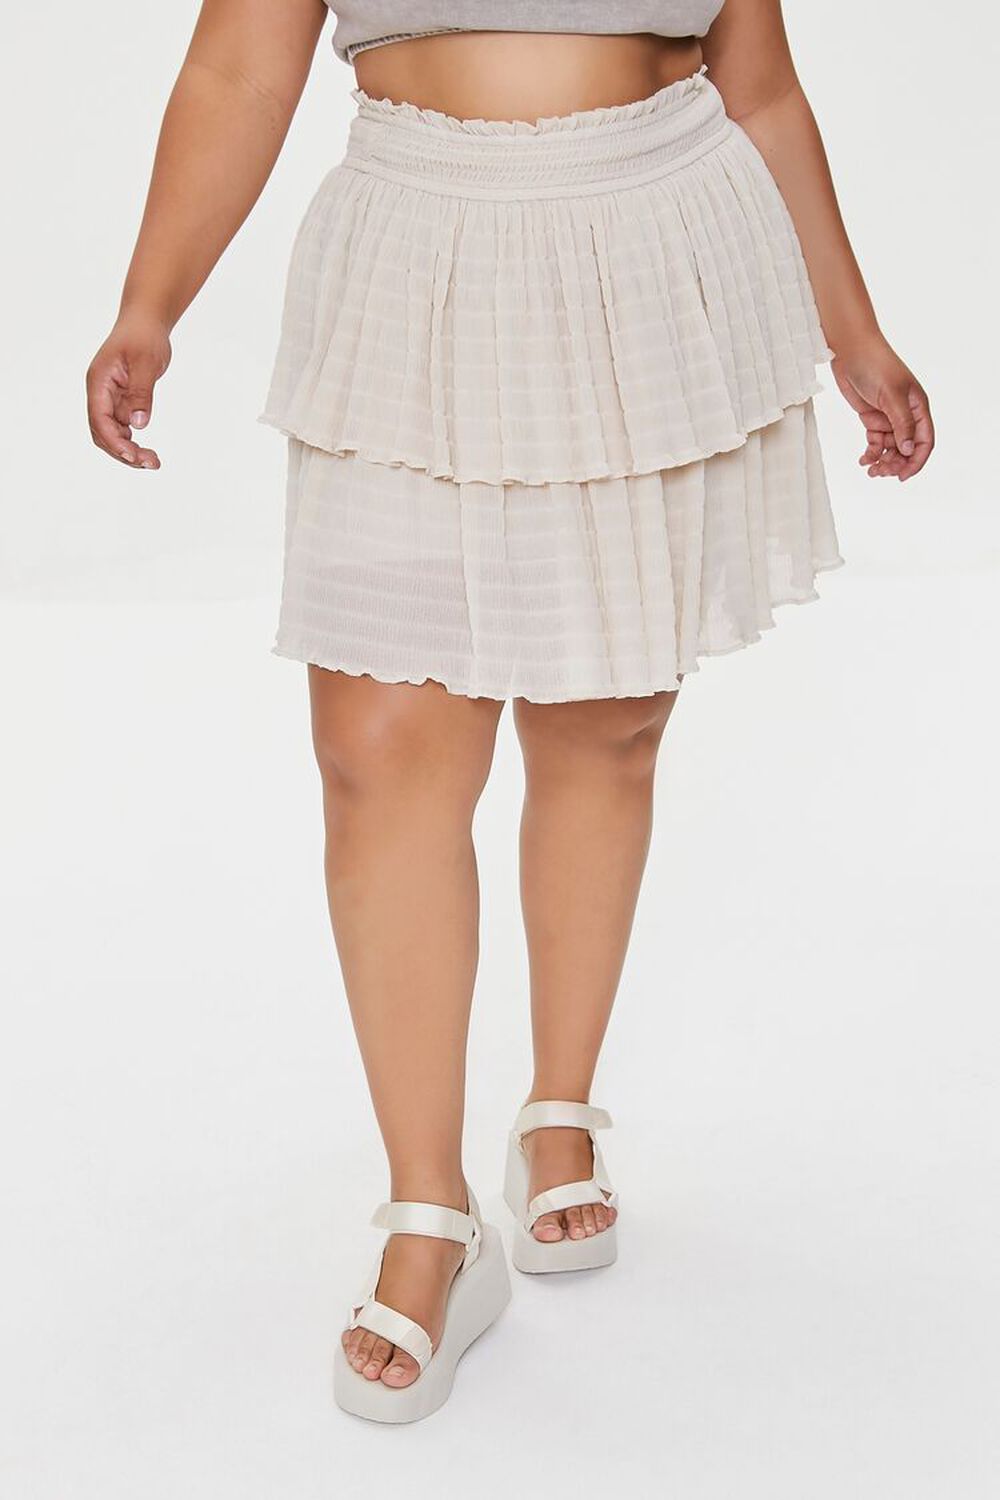 ASH BROWN Plus Size Tiered Flounce Mini Skirt, image 2